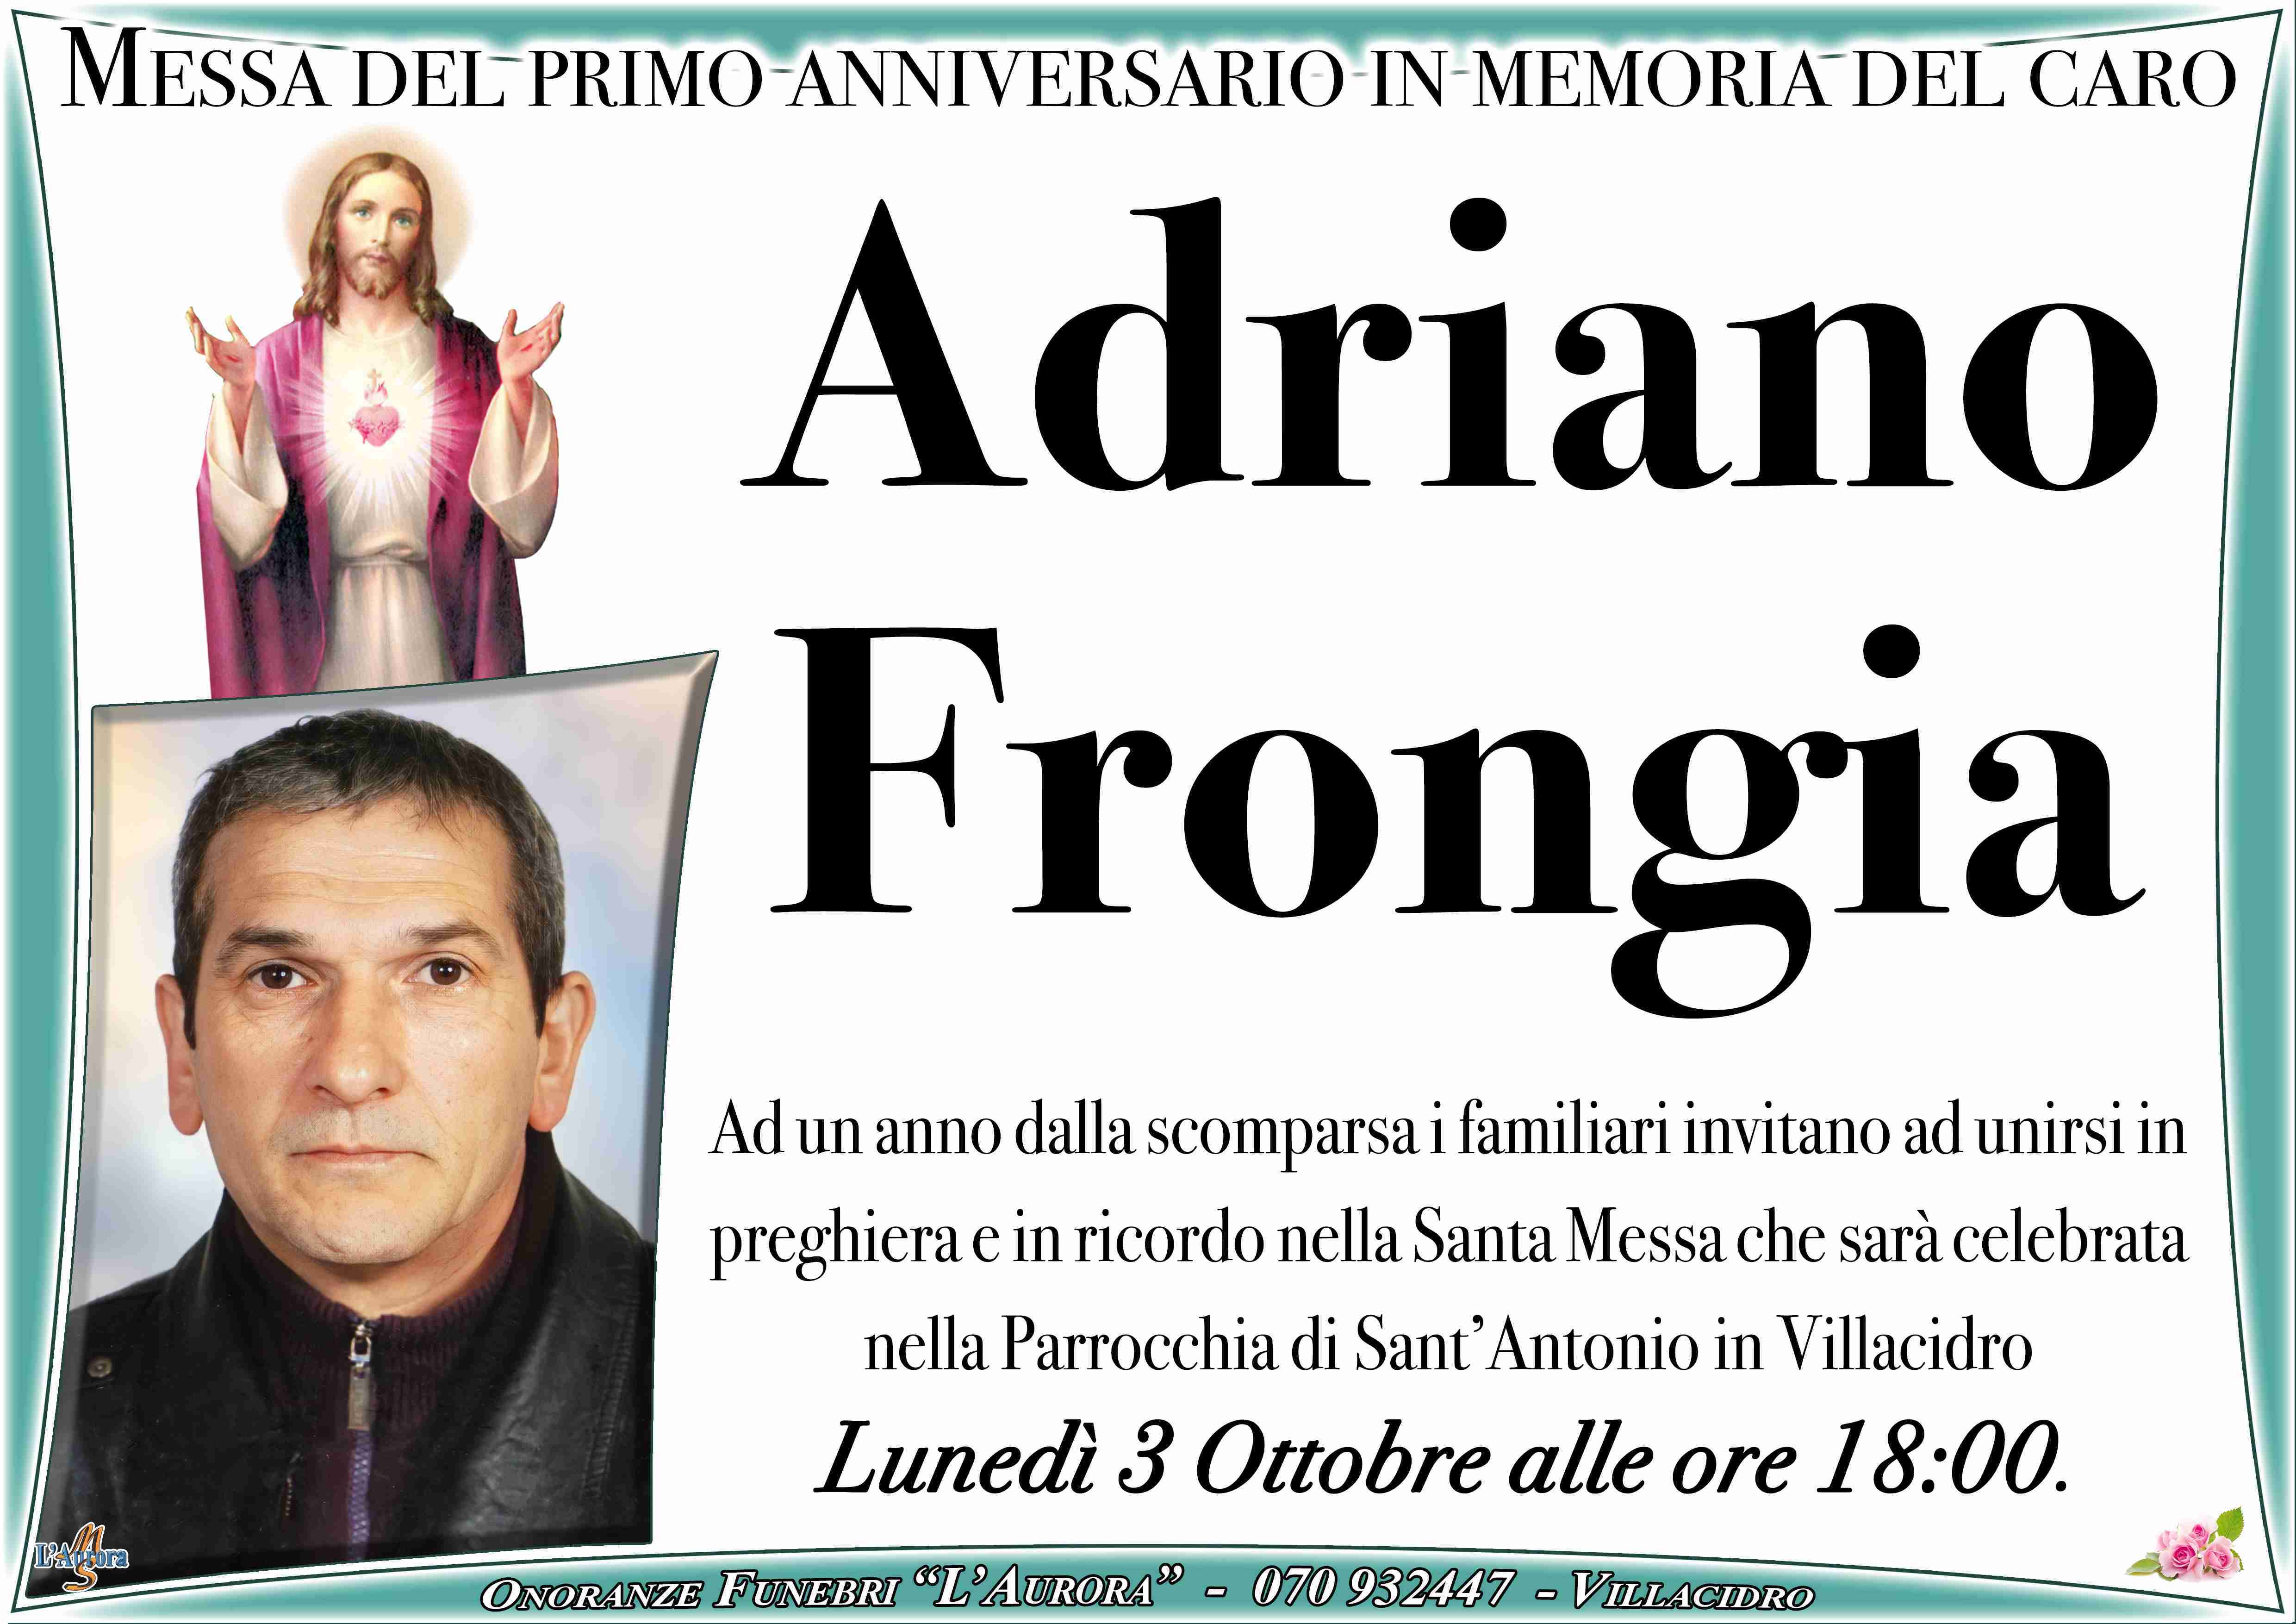 Adriano Frongia